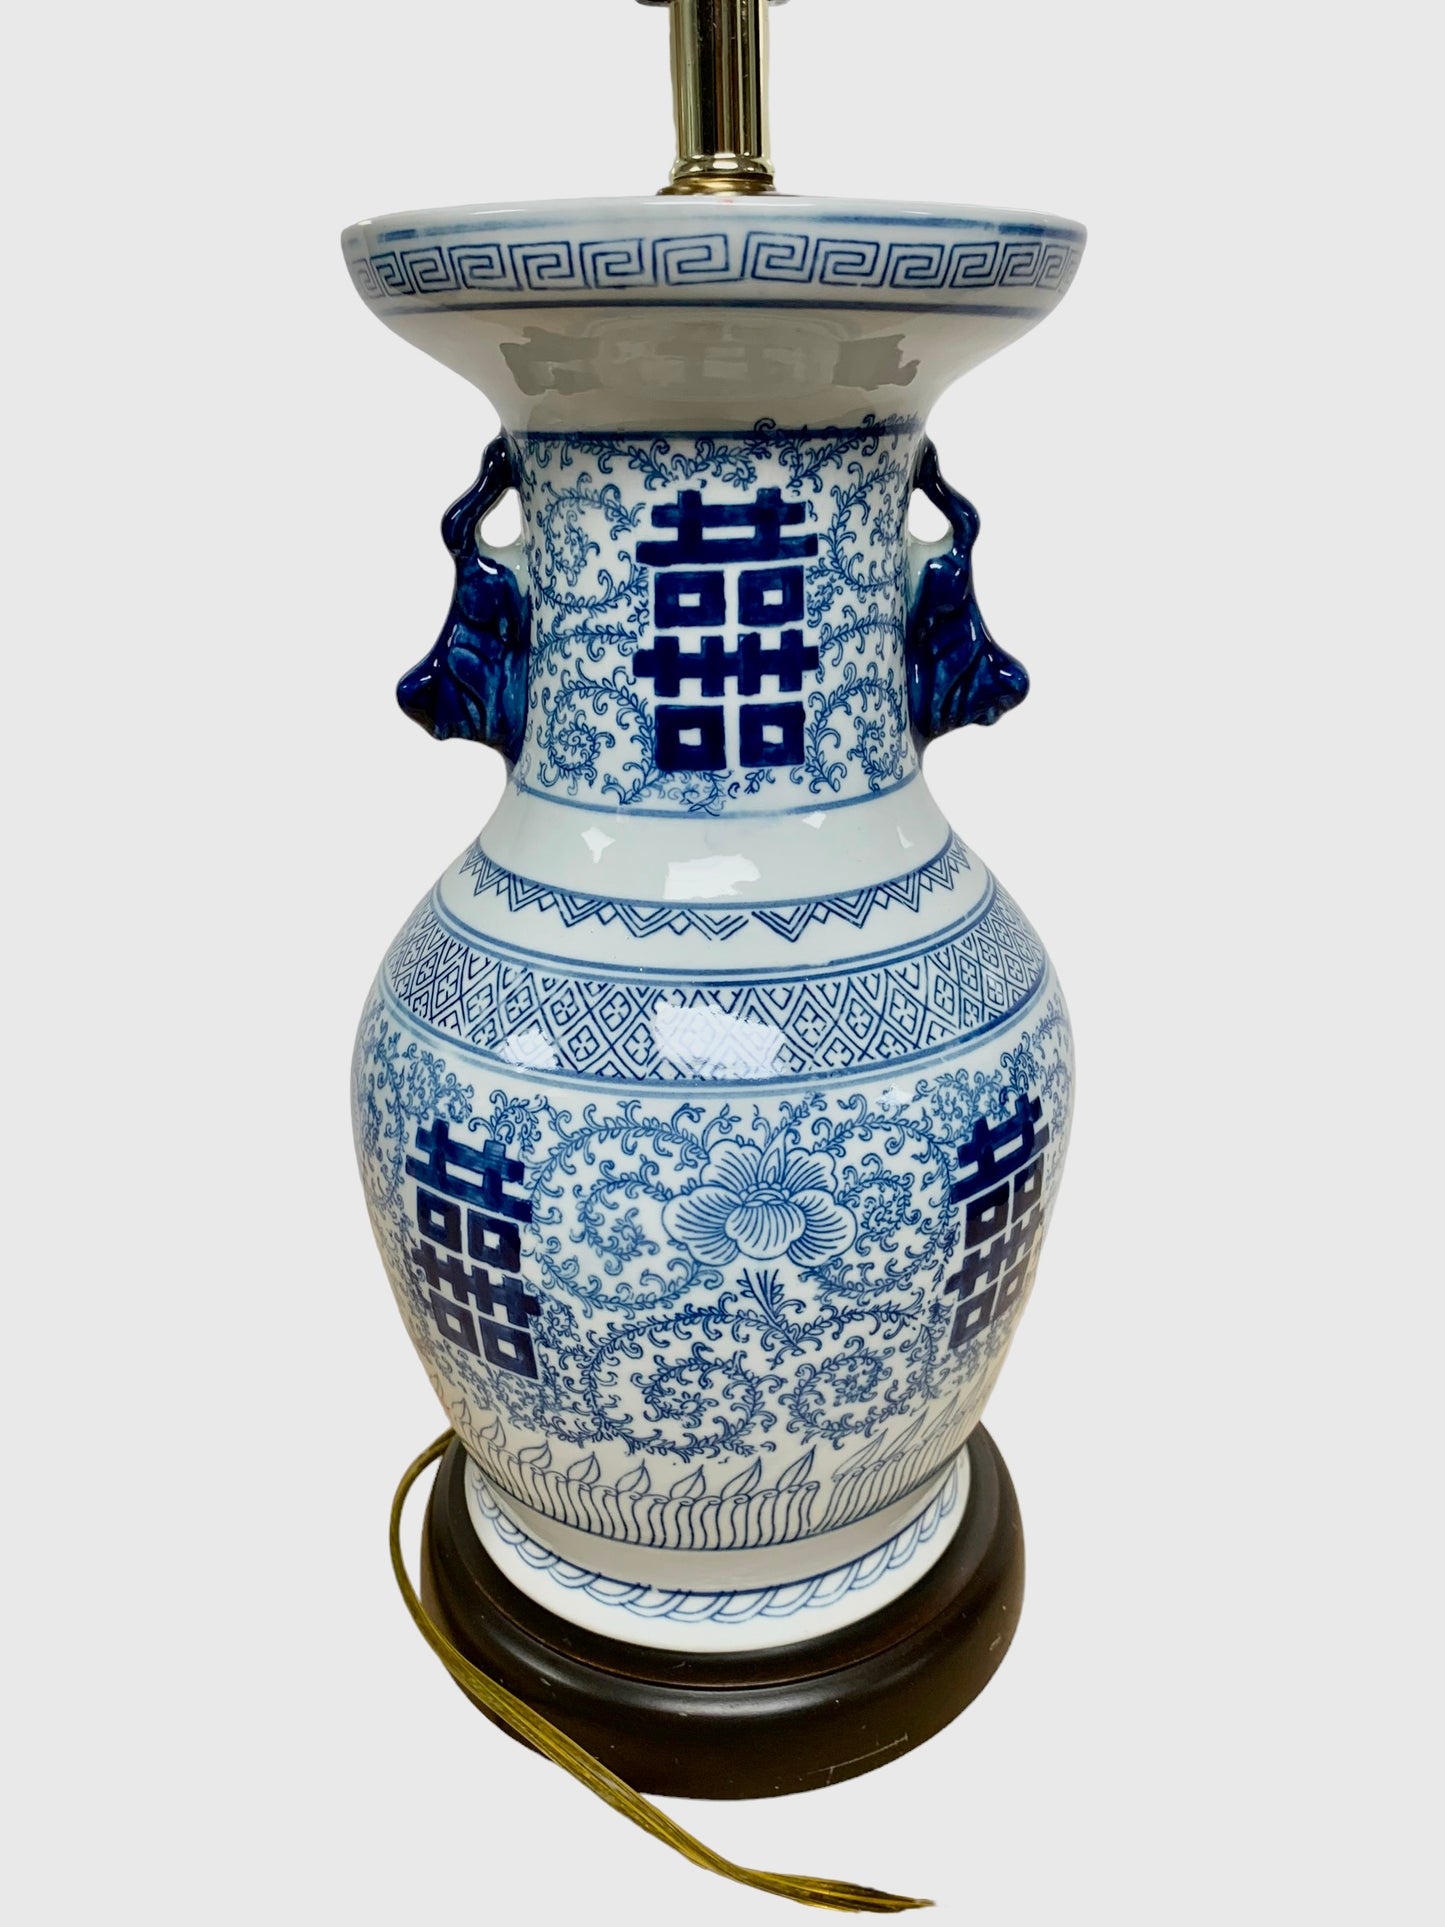 Lighting Vintage Estate Chinese Chinoiserie Design Table Lamp Blue on White Porcelain